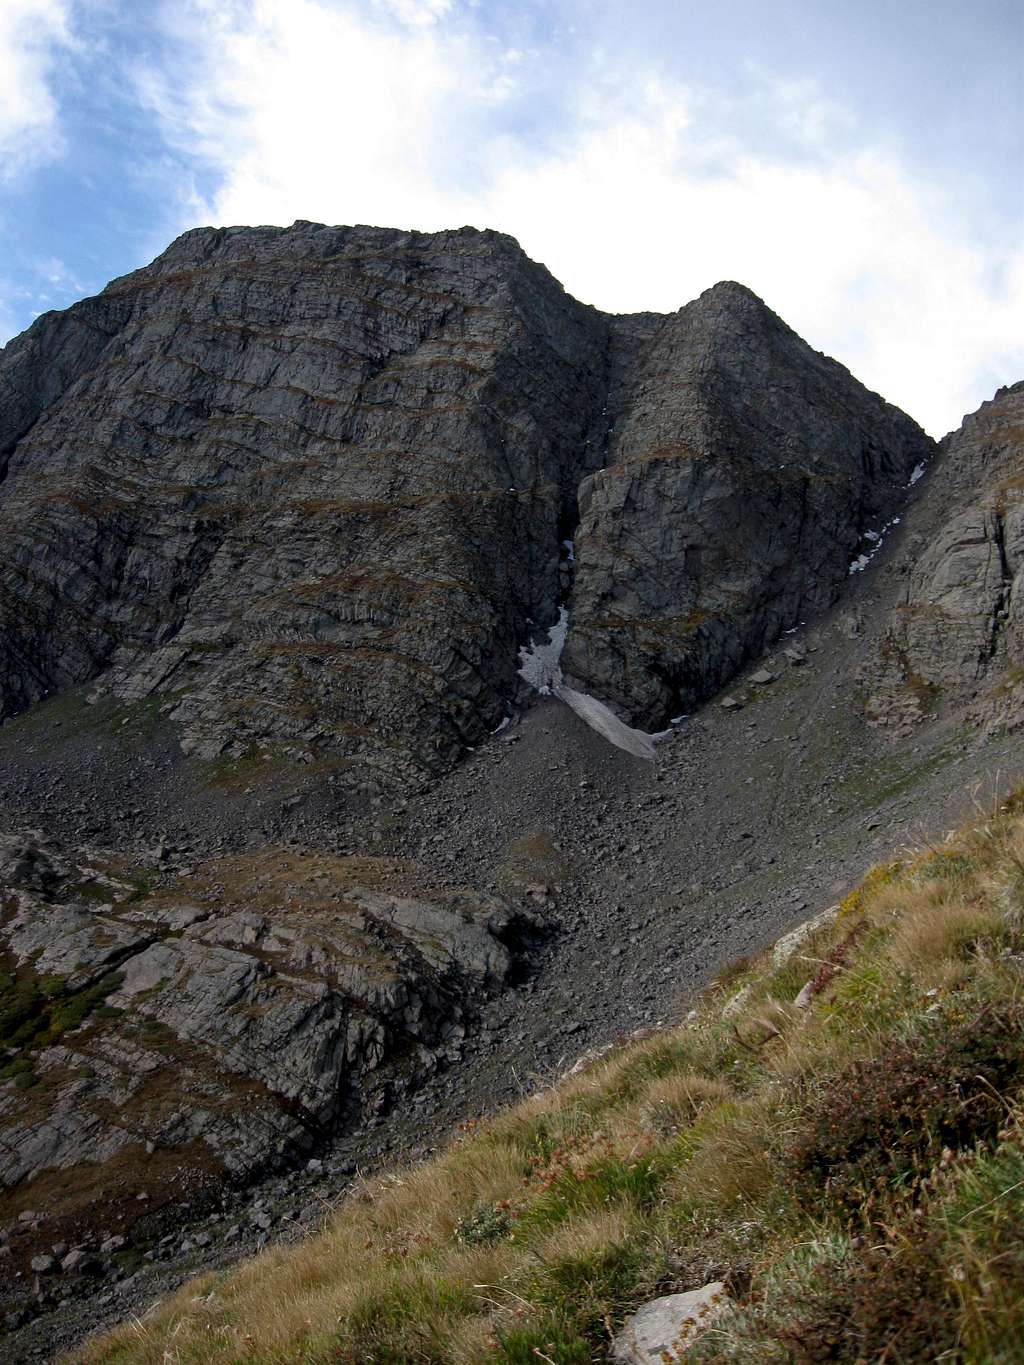 Mount Adams' south ridge